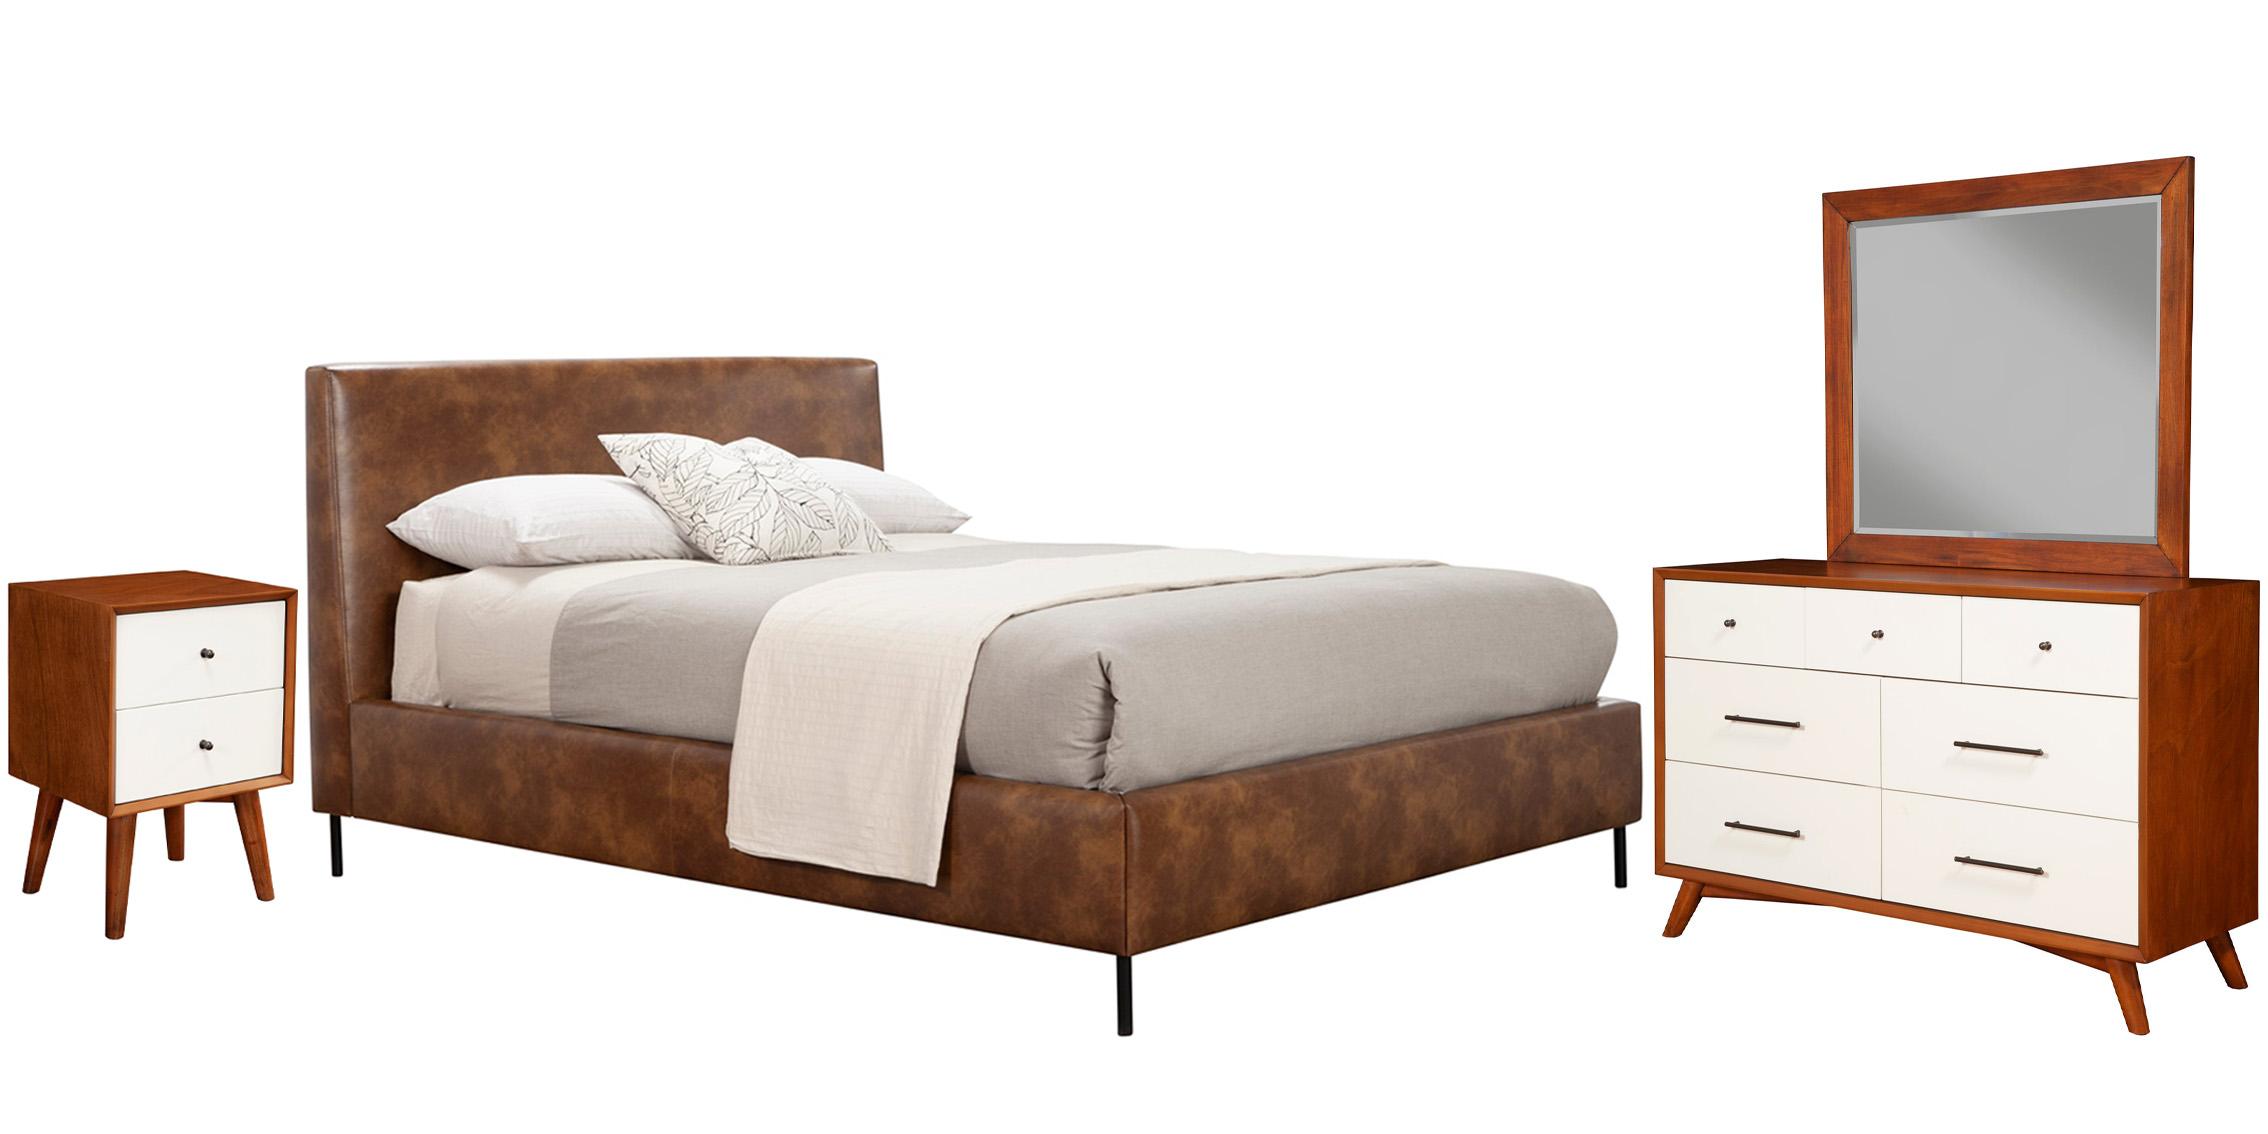 Modern, Rustic Platform Bedroom Set SOPHIA/FLYNN 6902F-BRN-Set-4 in Brown Faux Leather